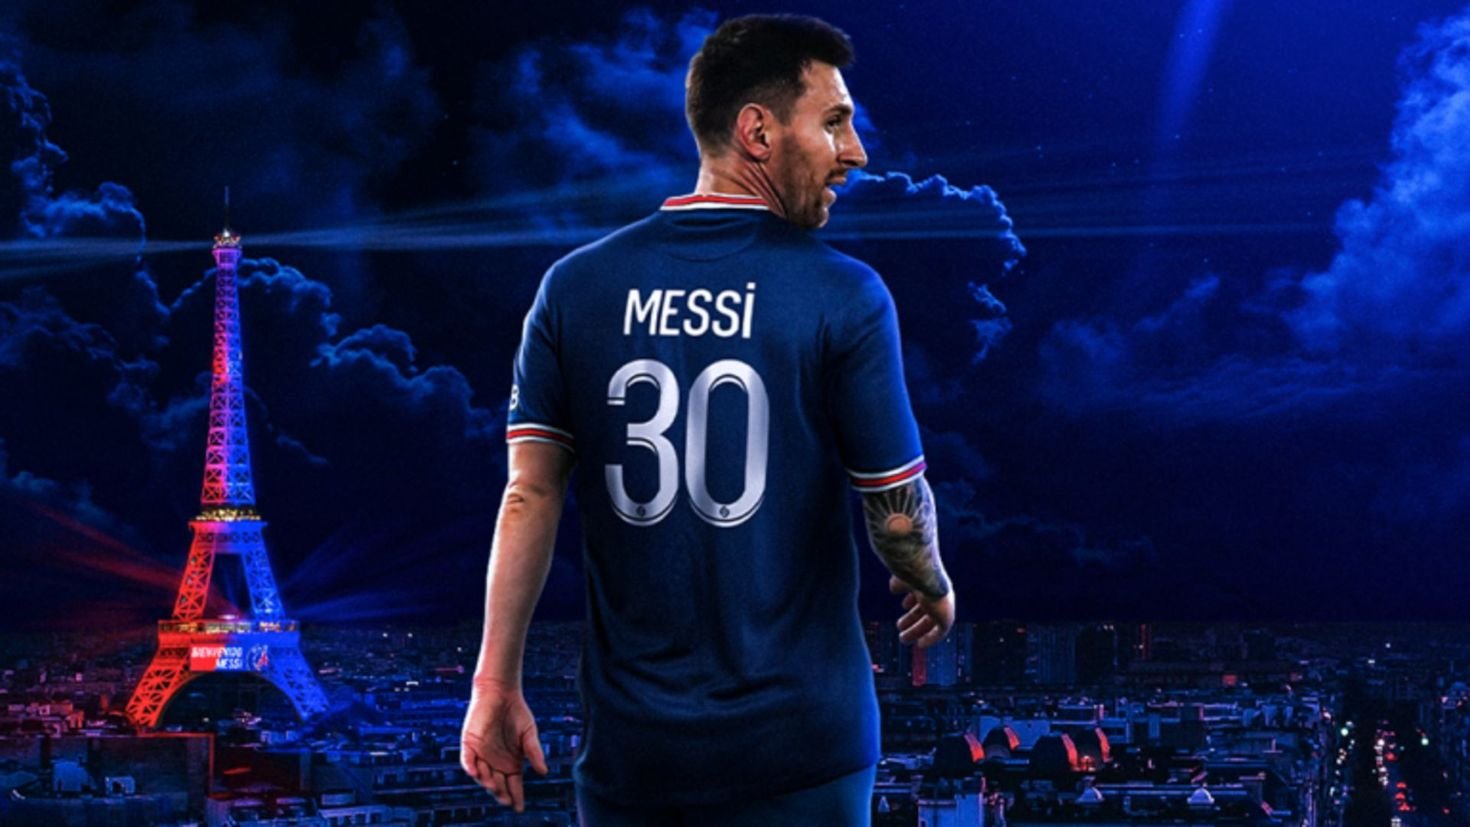 Messi 2022